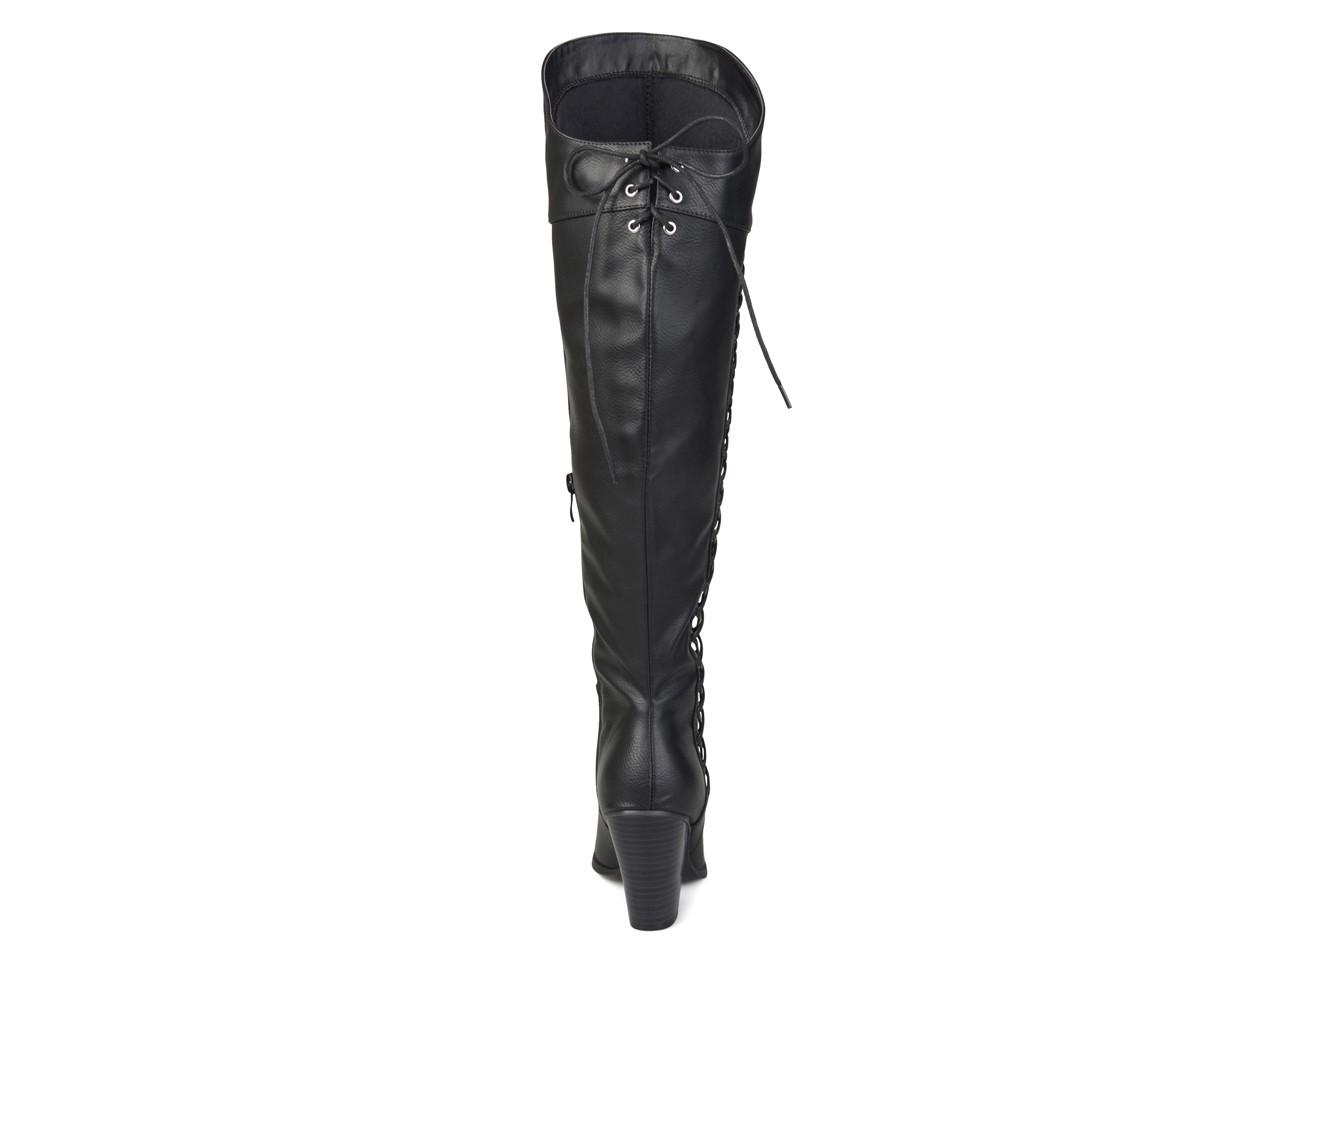 Women's Journee Collection Spritz Over-The-Knee Boots